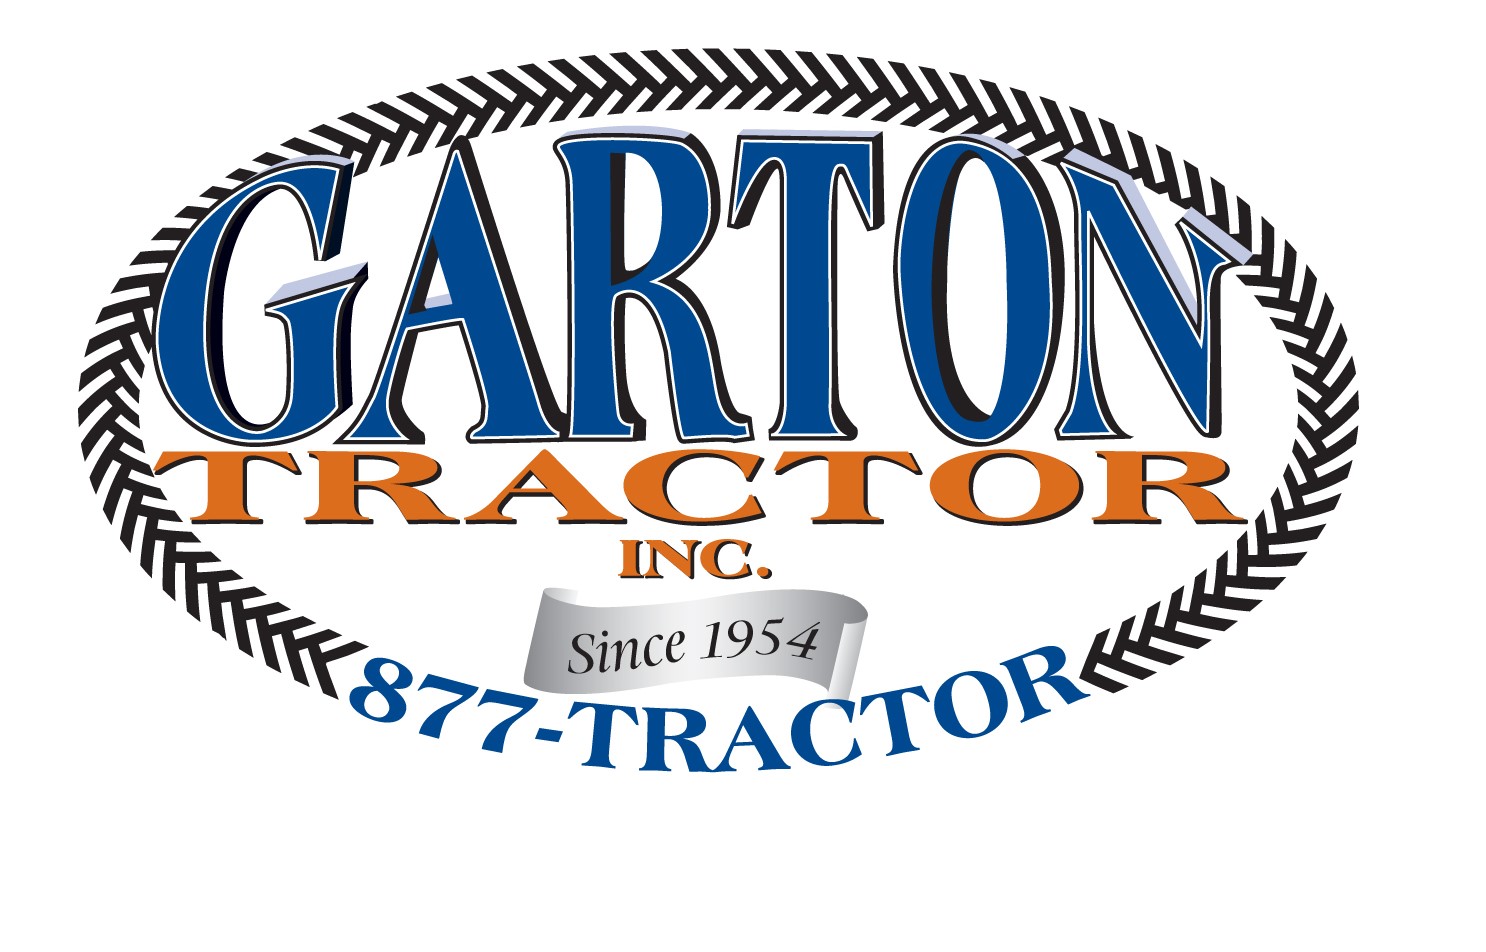 Garton Tractor